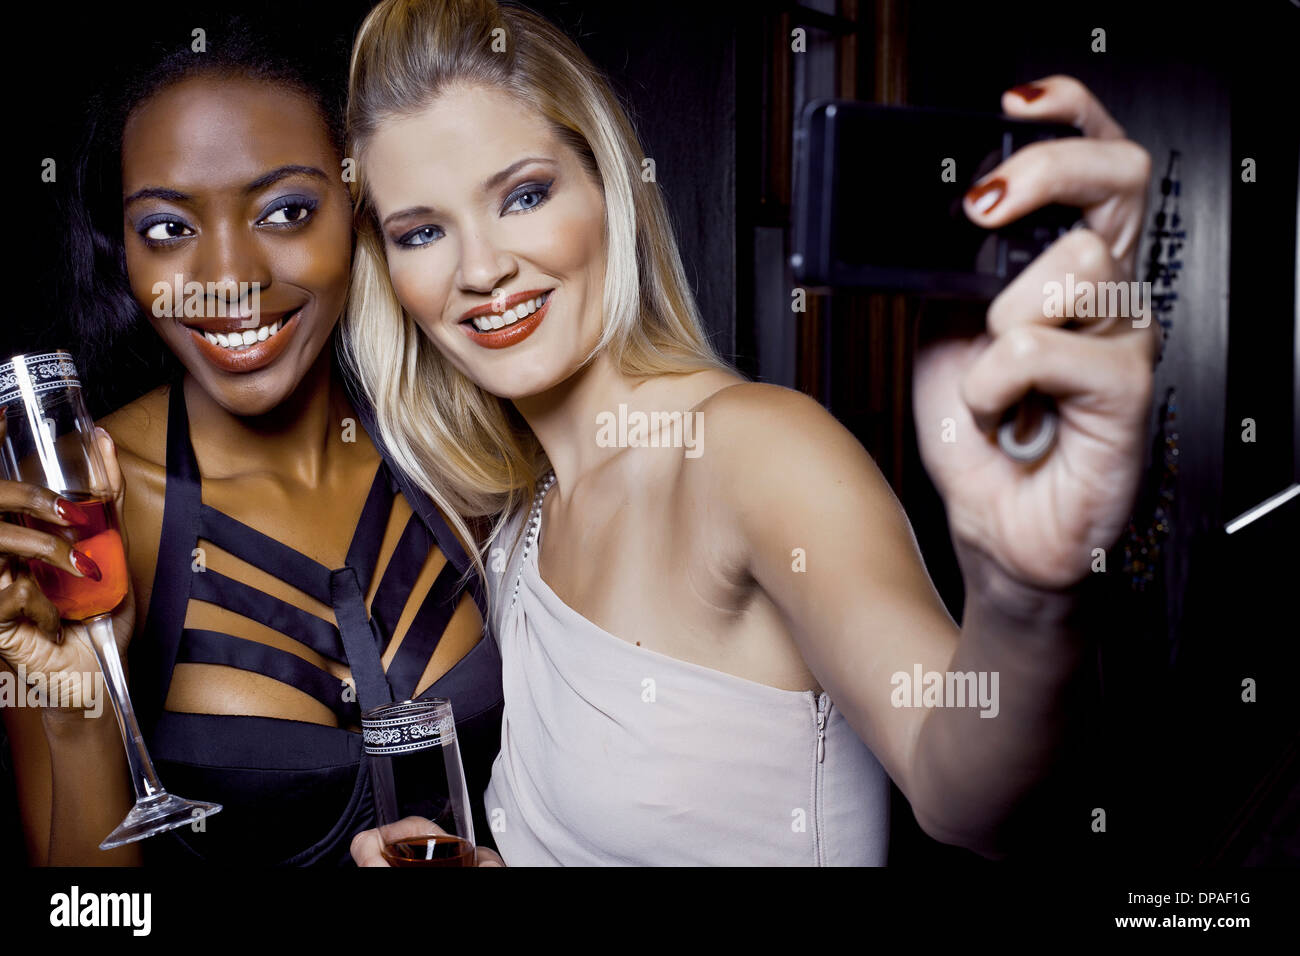 Two female friends making self portrait in nightclub Stock Photo - Alamy